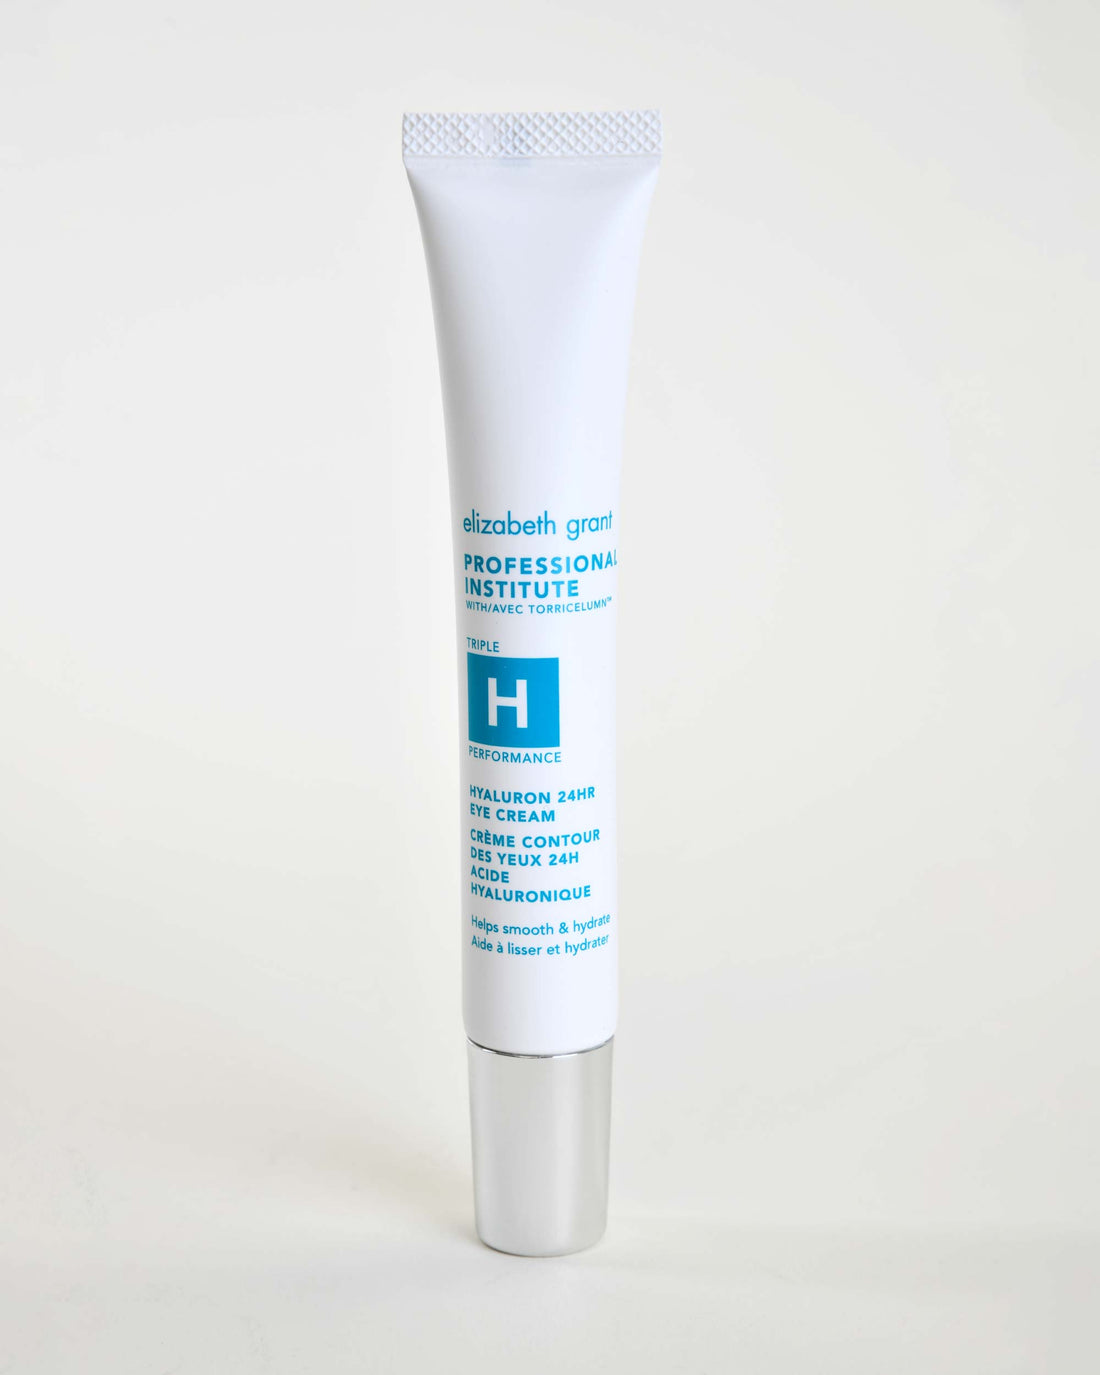 Professional Institute Triple Performance Hyaluron 24 Hour Eye Cream